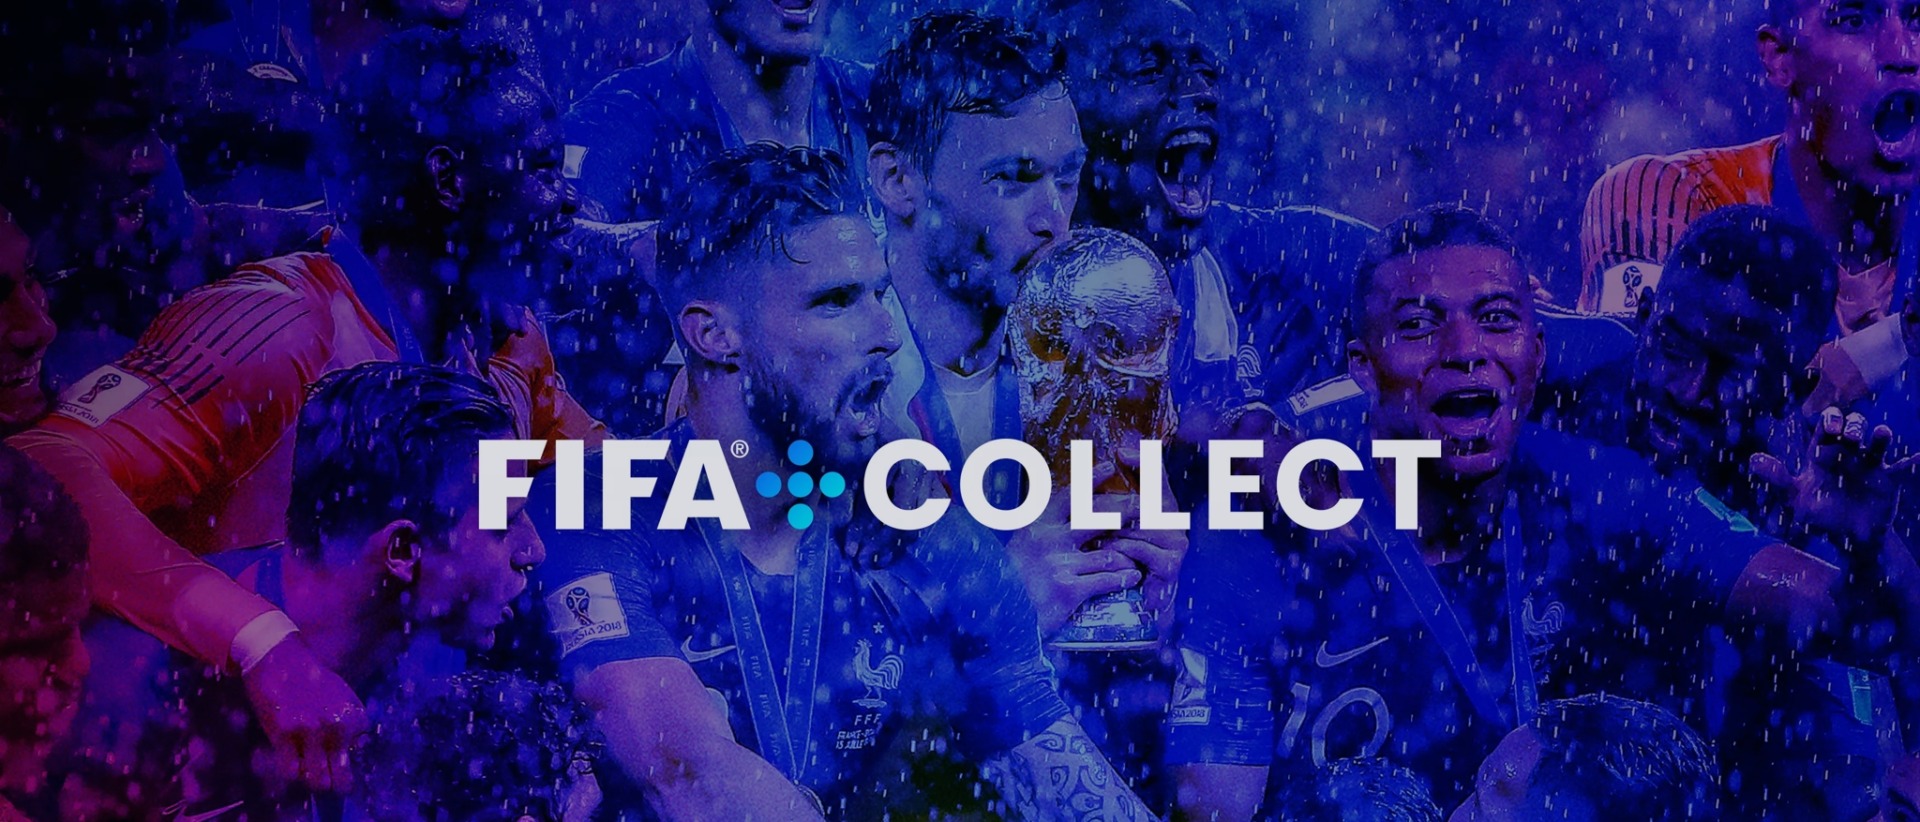 kriptoblogu_FIFA-Collect-promo-graphic.jpg